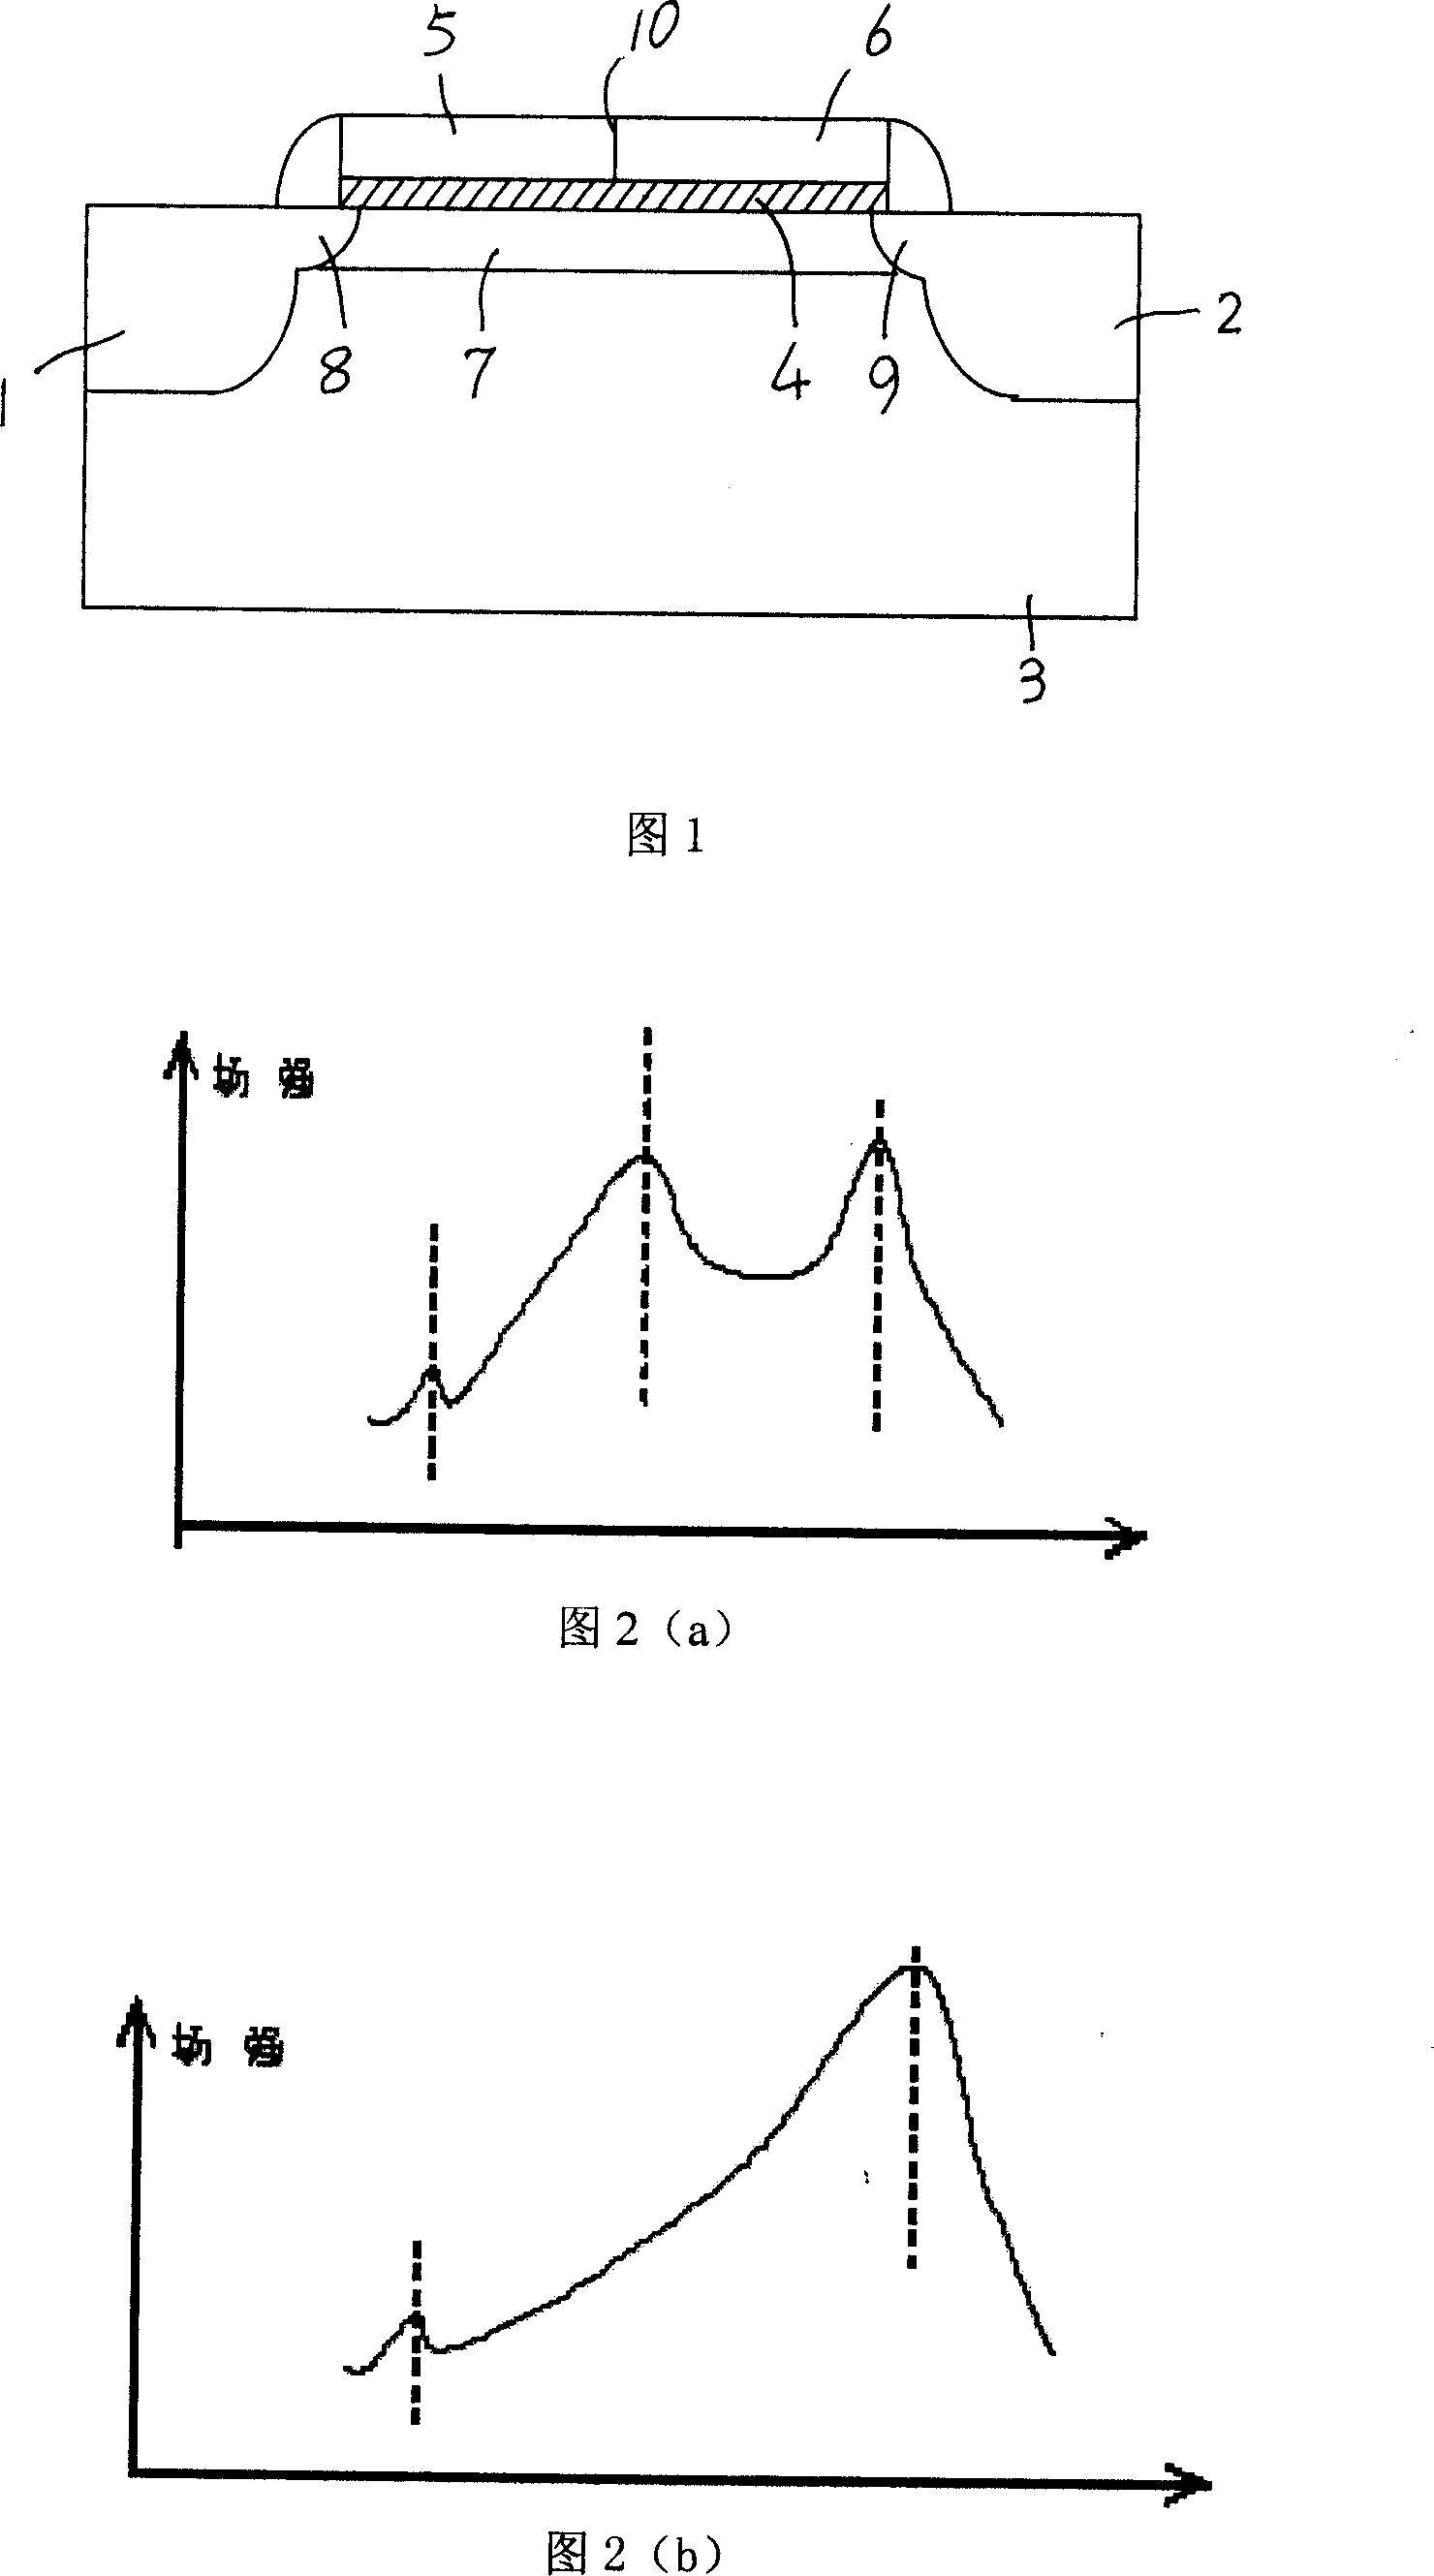 Homojunction combined gate field effect transistor